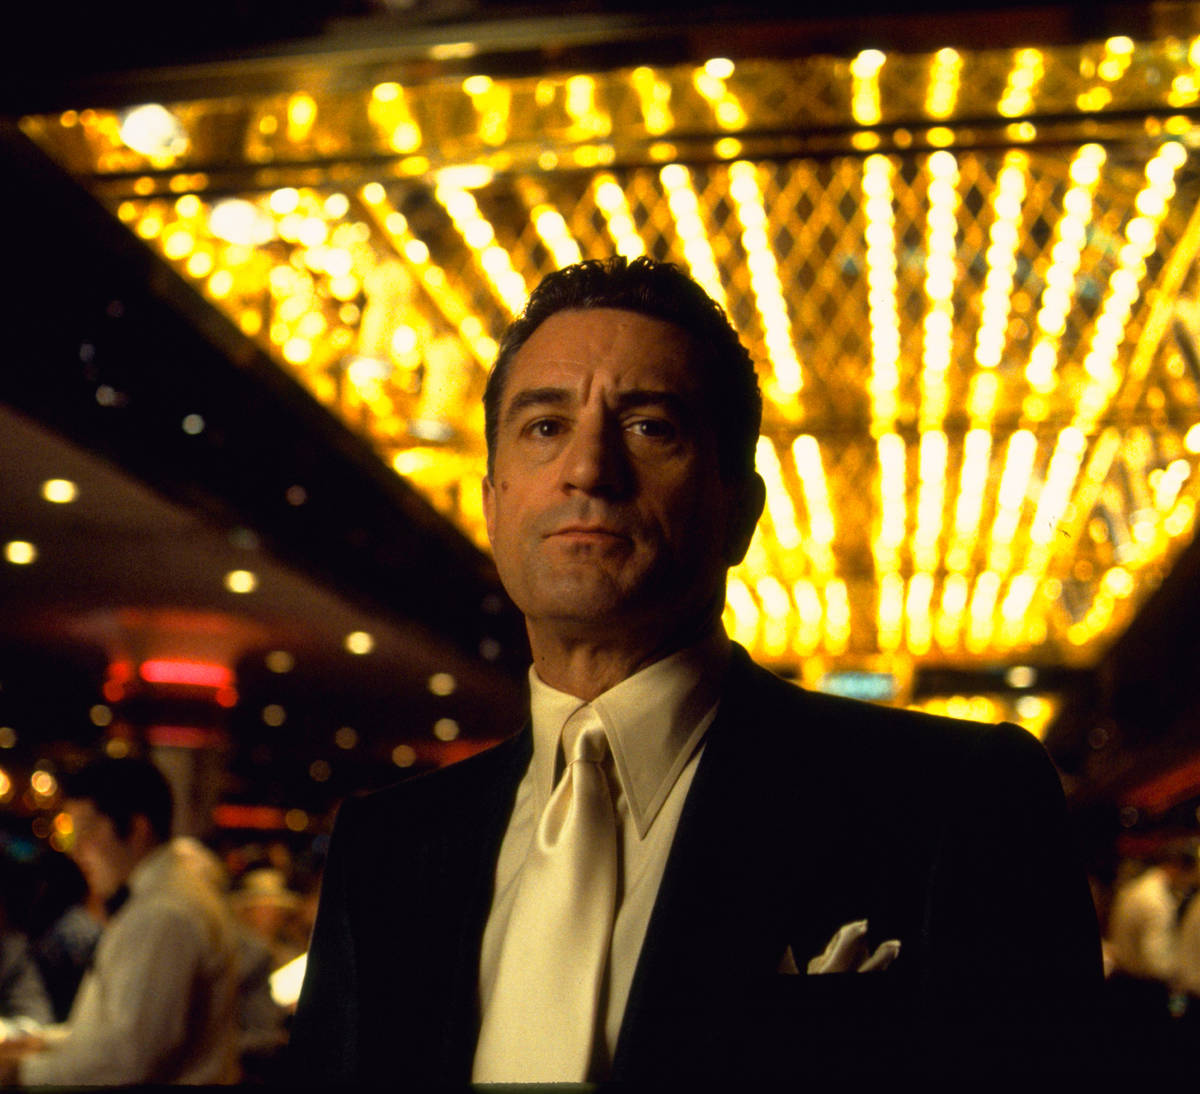 Robert De Niro stars as Sam "Ace" Rothstein in "Casino." (Universal Pictures)